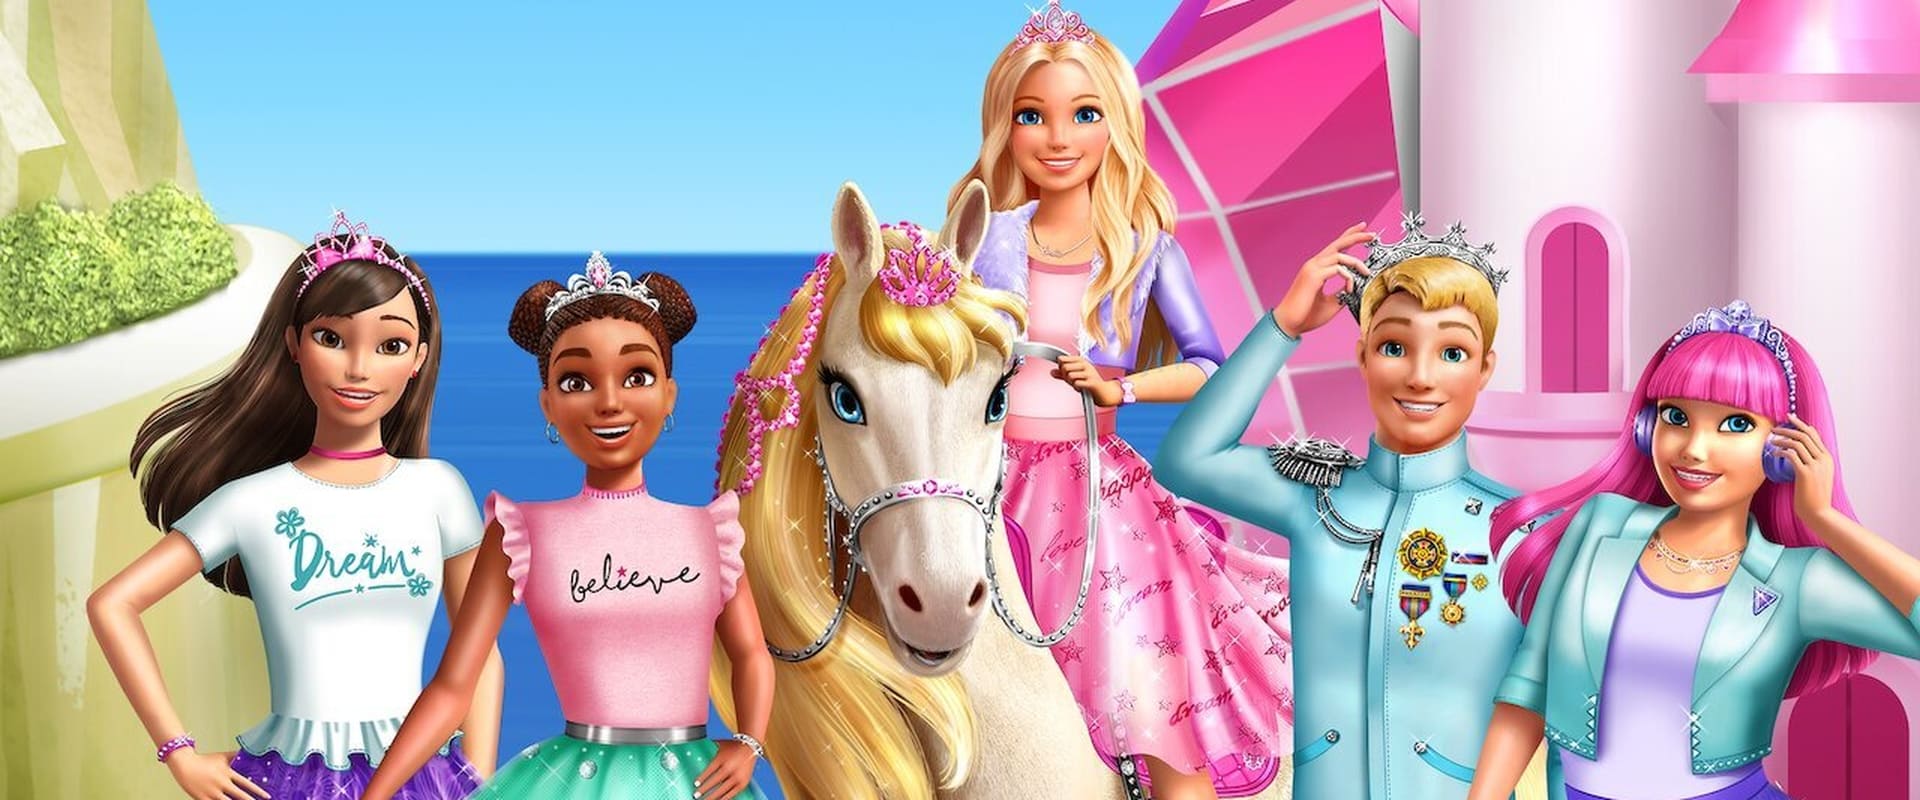 Barbie - Avventure da principessa